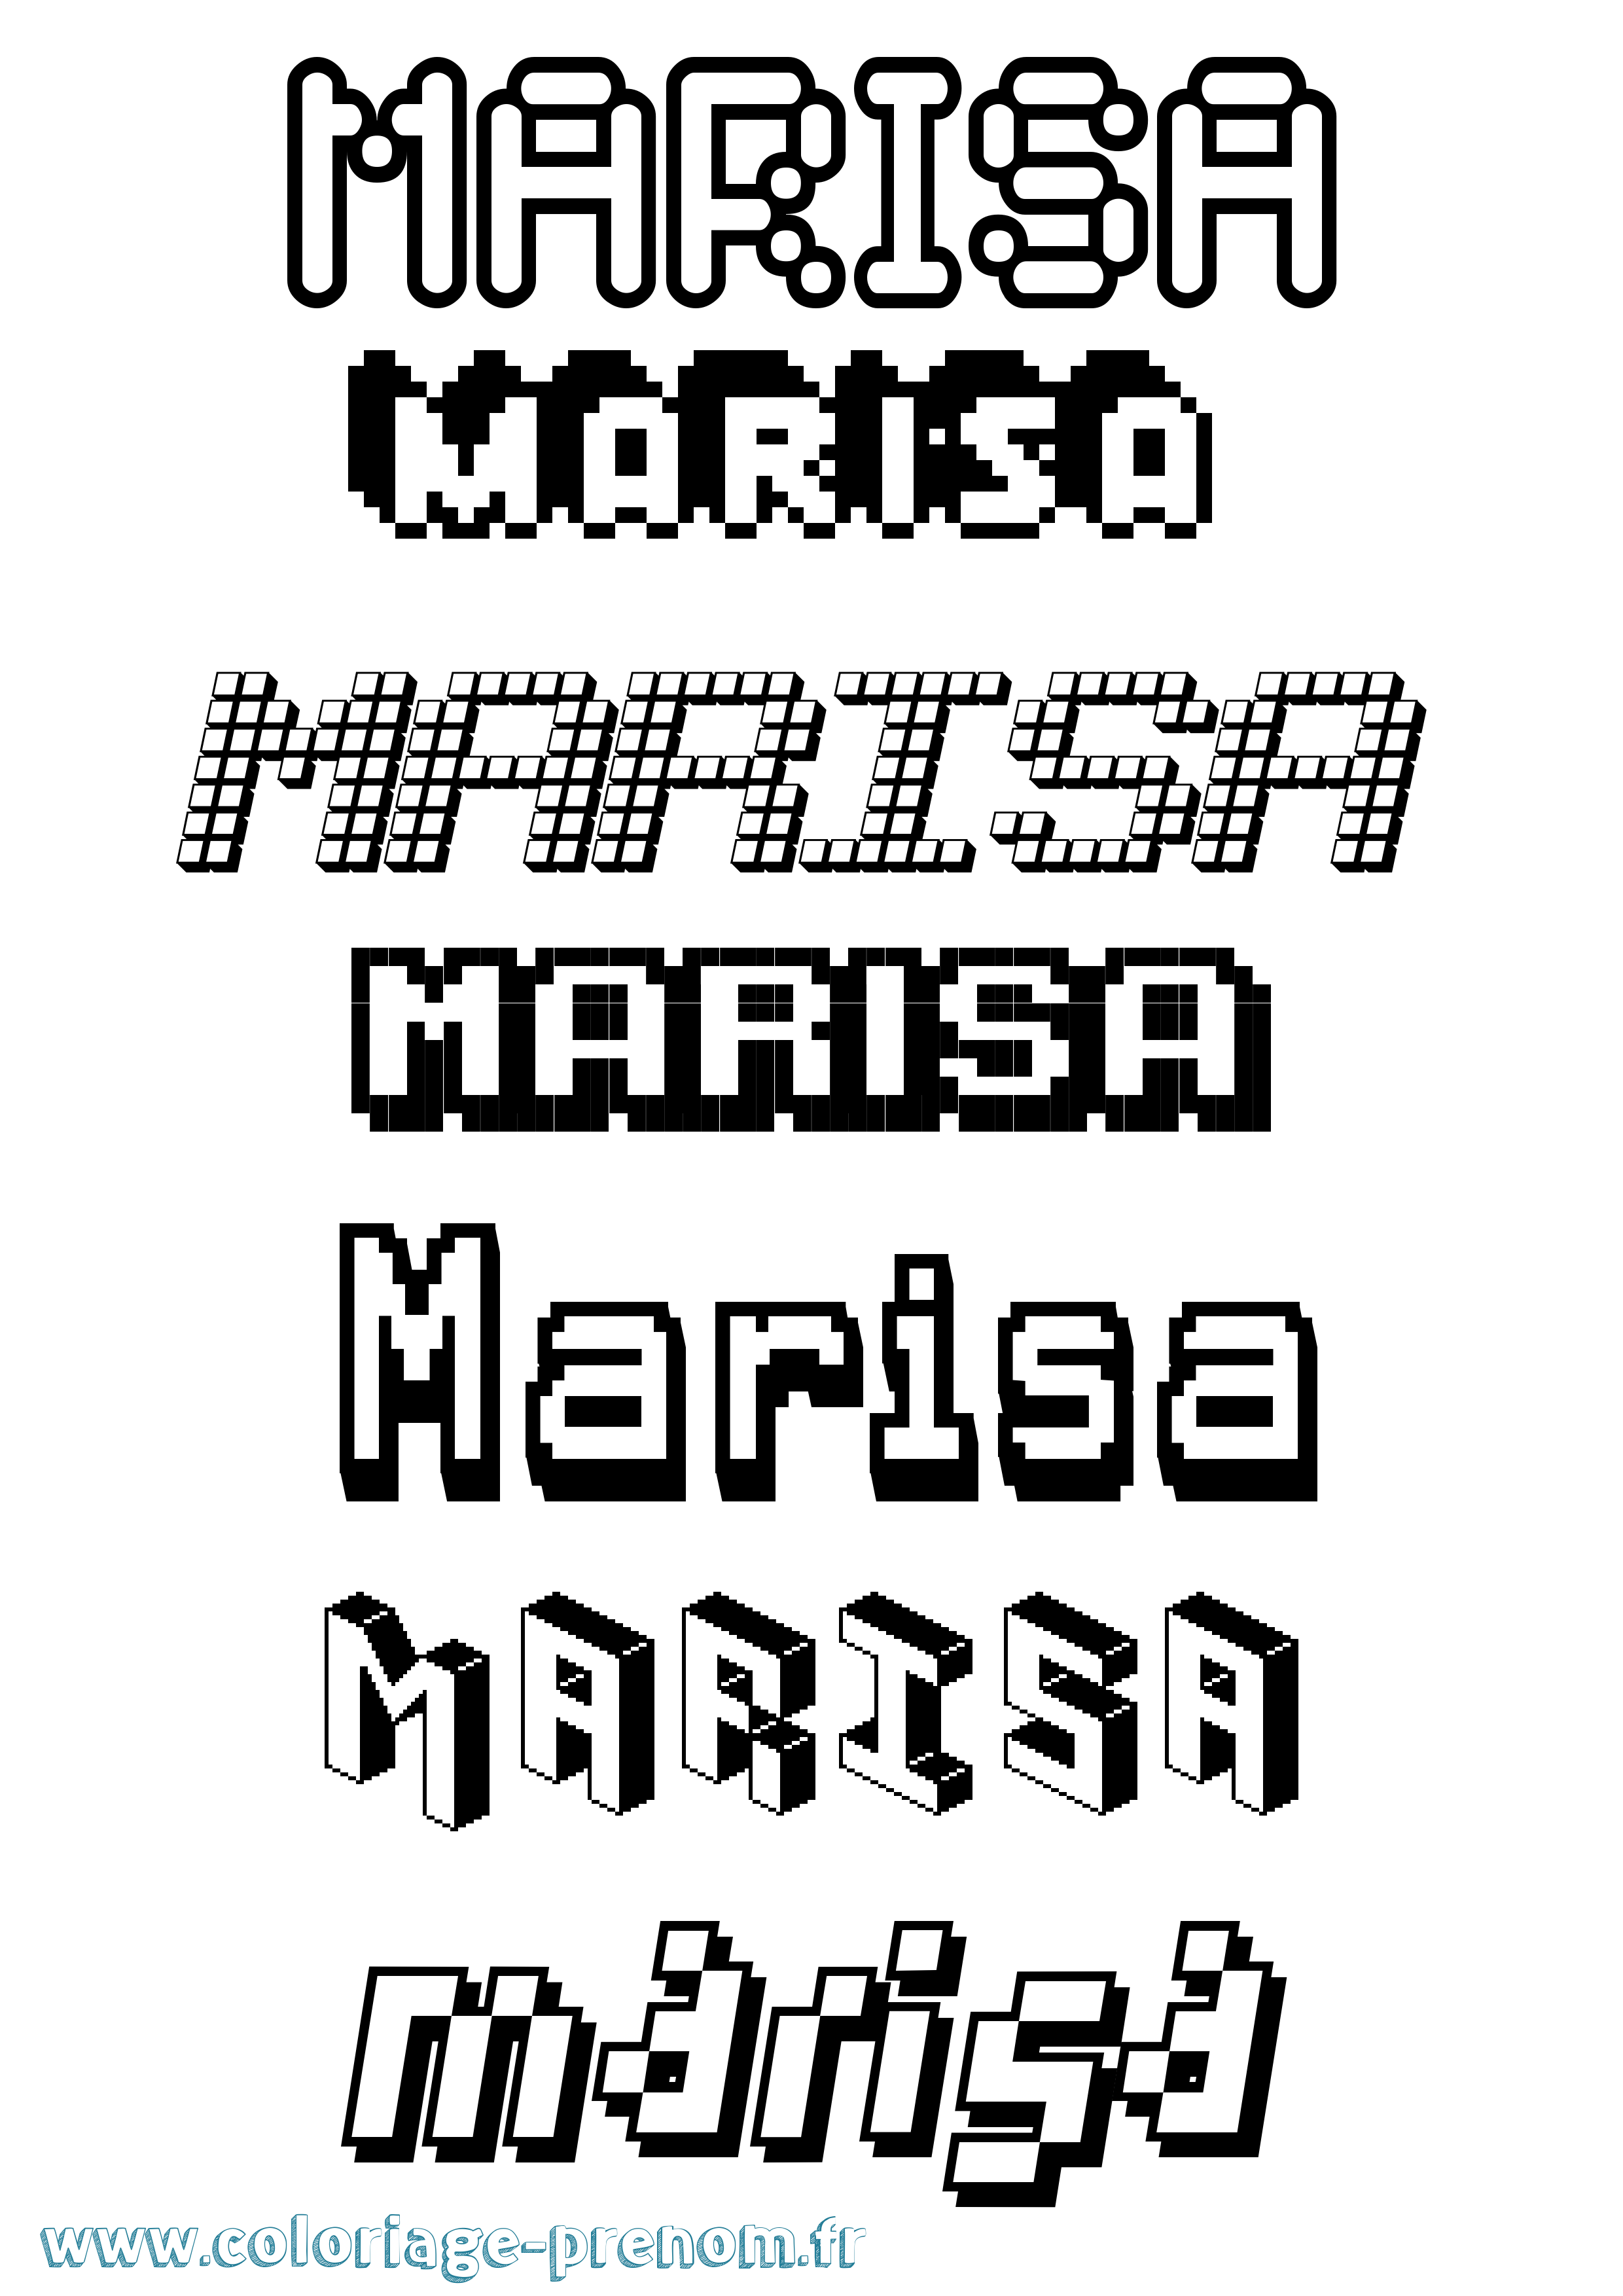 Coloriage prénom Marisa Pixel